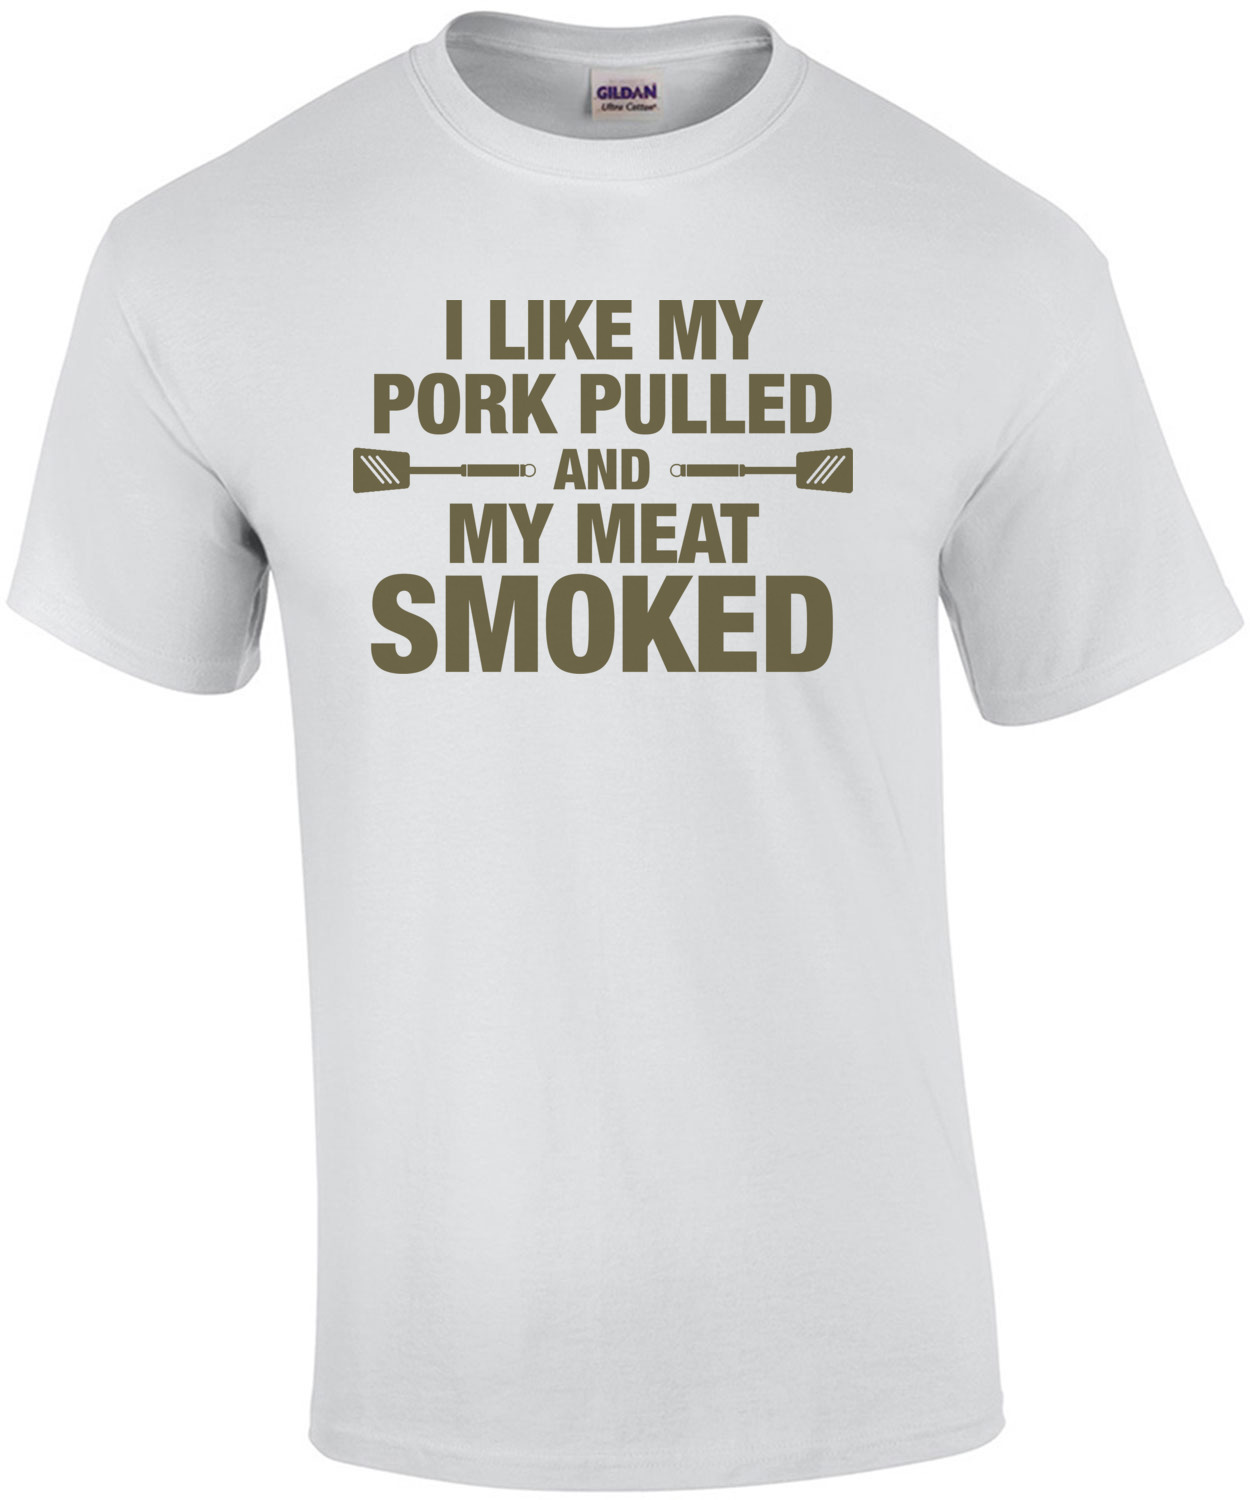 I Like My Pork Pulled & My Meat Smoked shirt